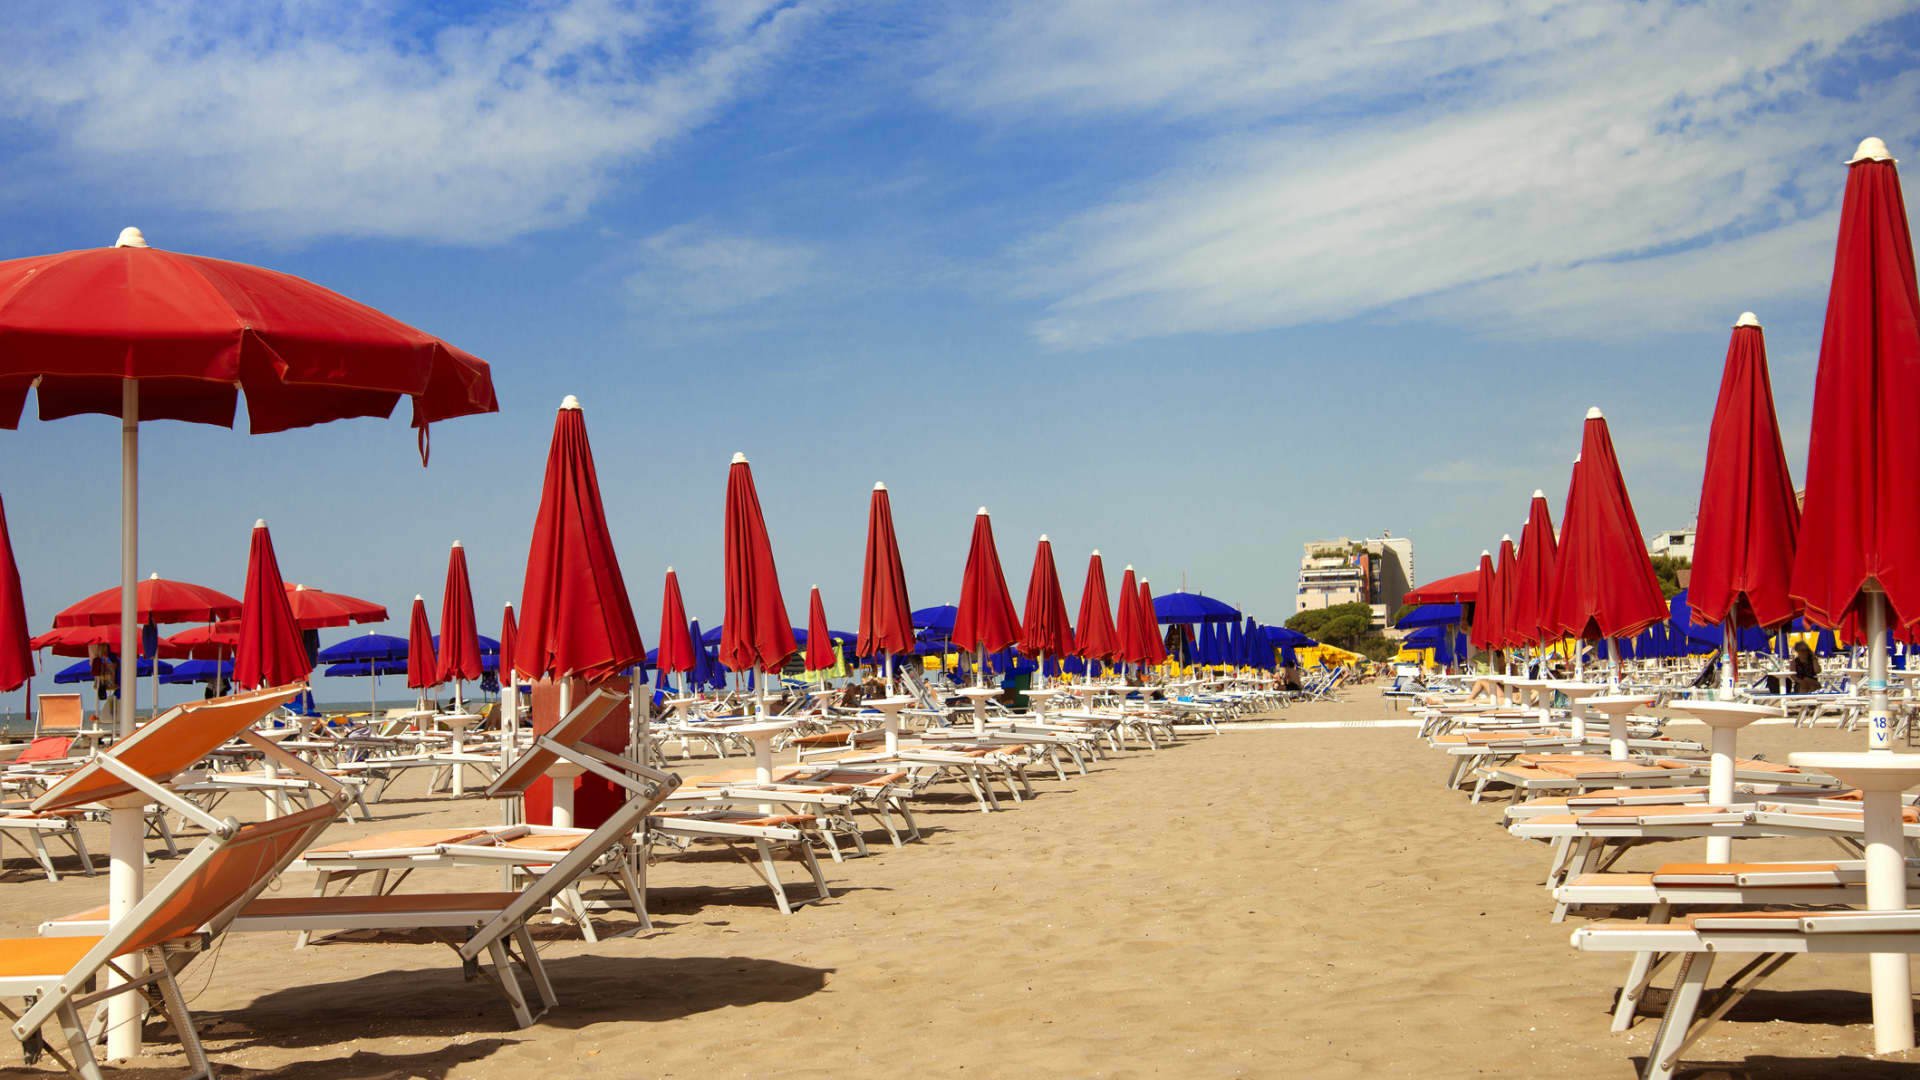 The Grado providence in the Friuli-Venezia Giulia, Italy region is known for its famous spa hotels.